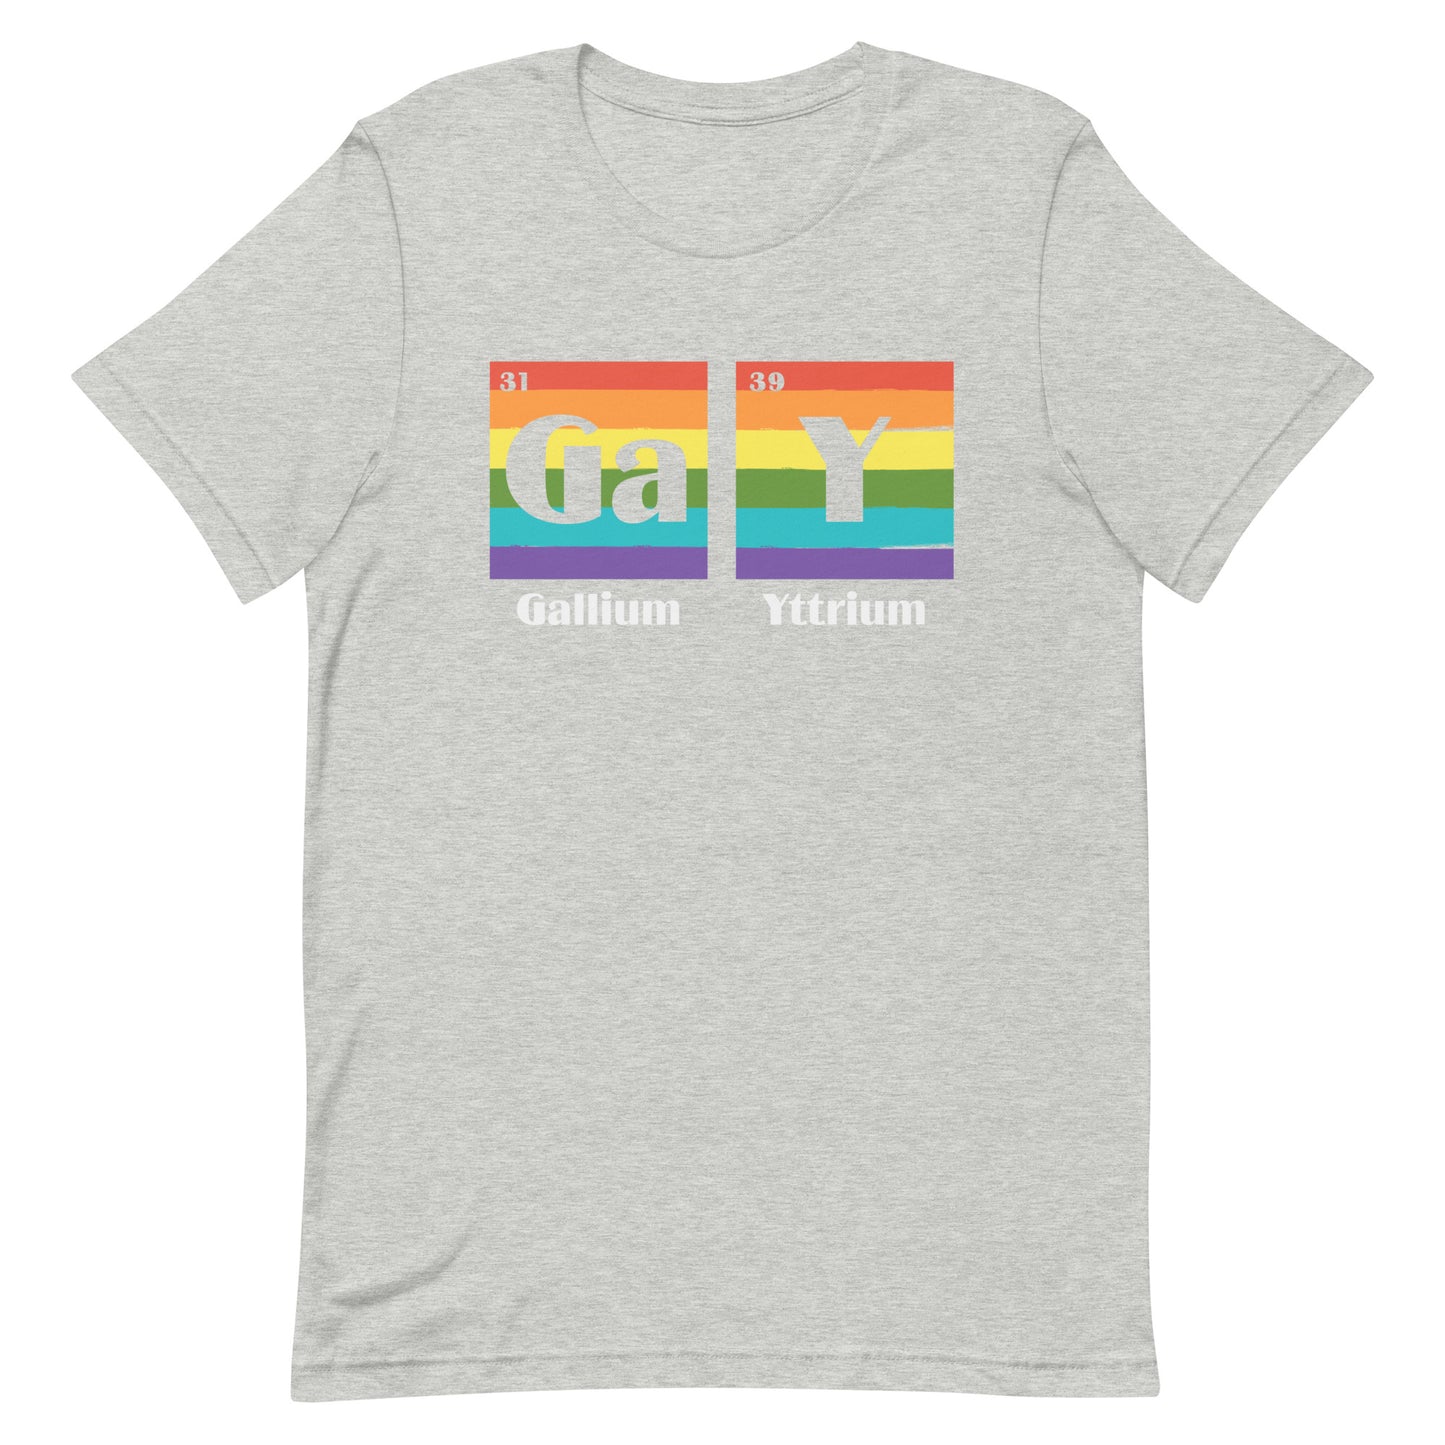 Ga-Y (Gallium-Yttrium) LGBTQ Pride T-Shirt - gay pride apparel